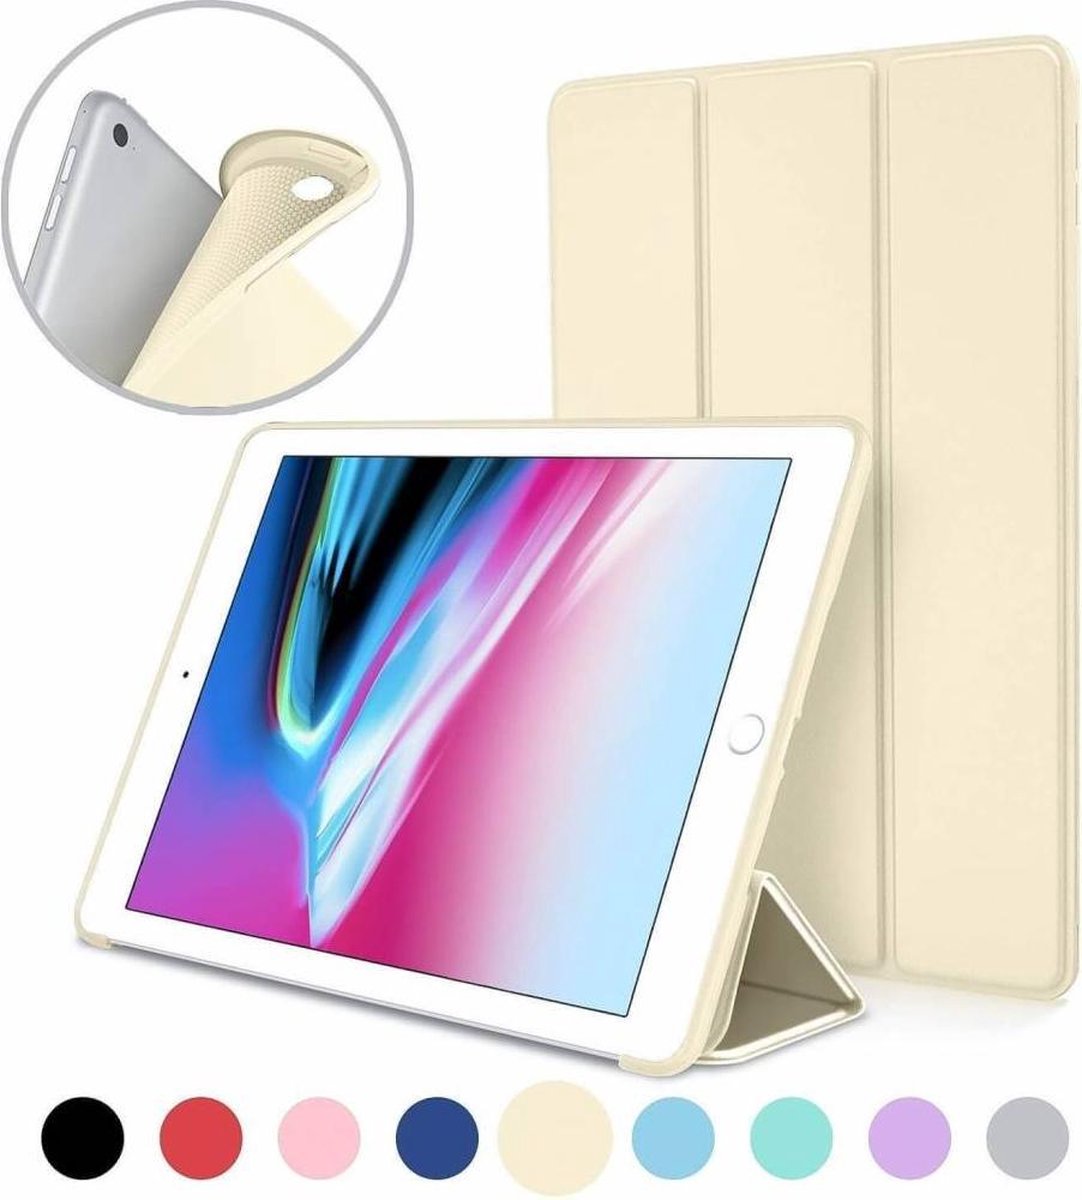 iPadspullekes.nl - iPad Pro 11 Smart Cover Case Goud